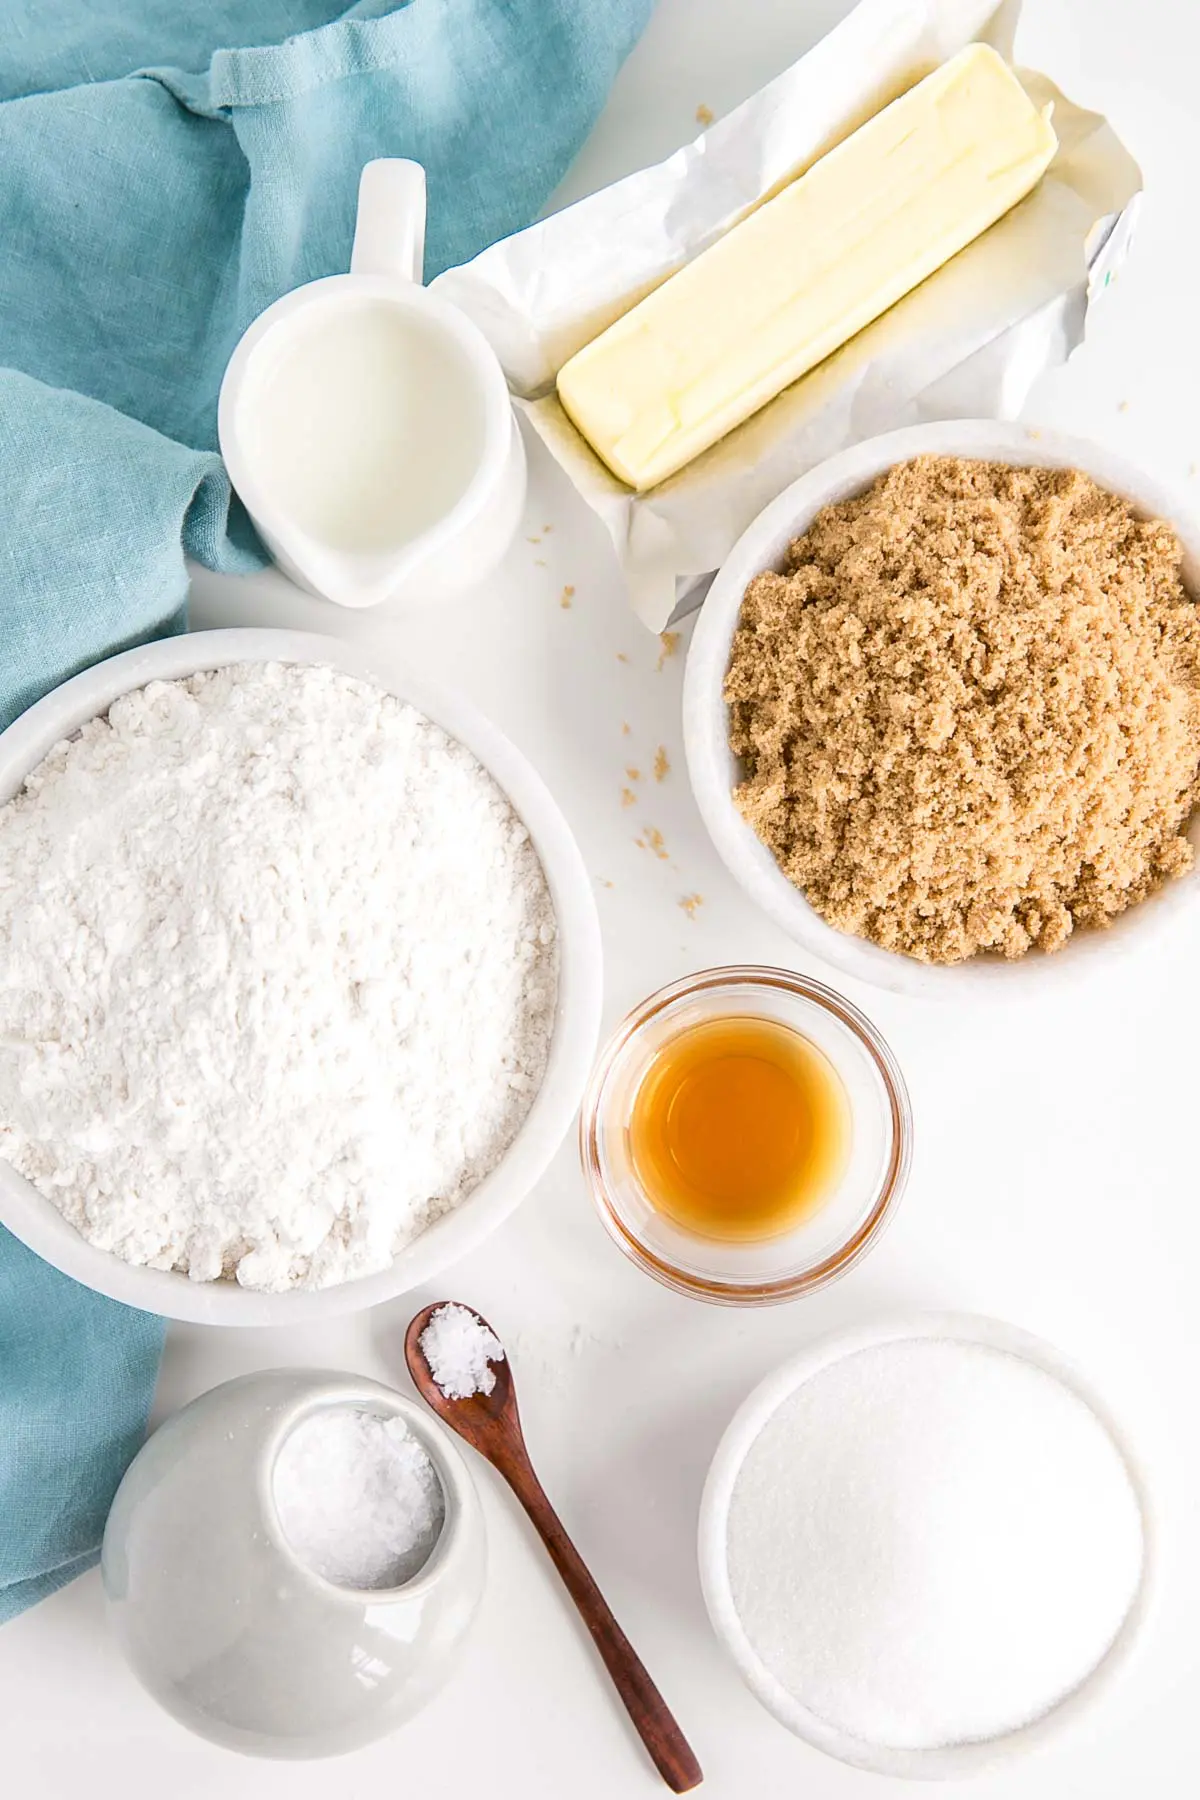 Photo of the ingredients needed -- flour, sugars, butter, milk, salt, vanilla..